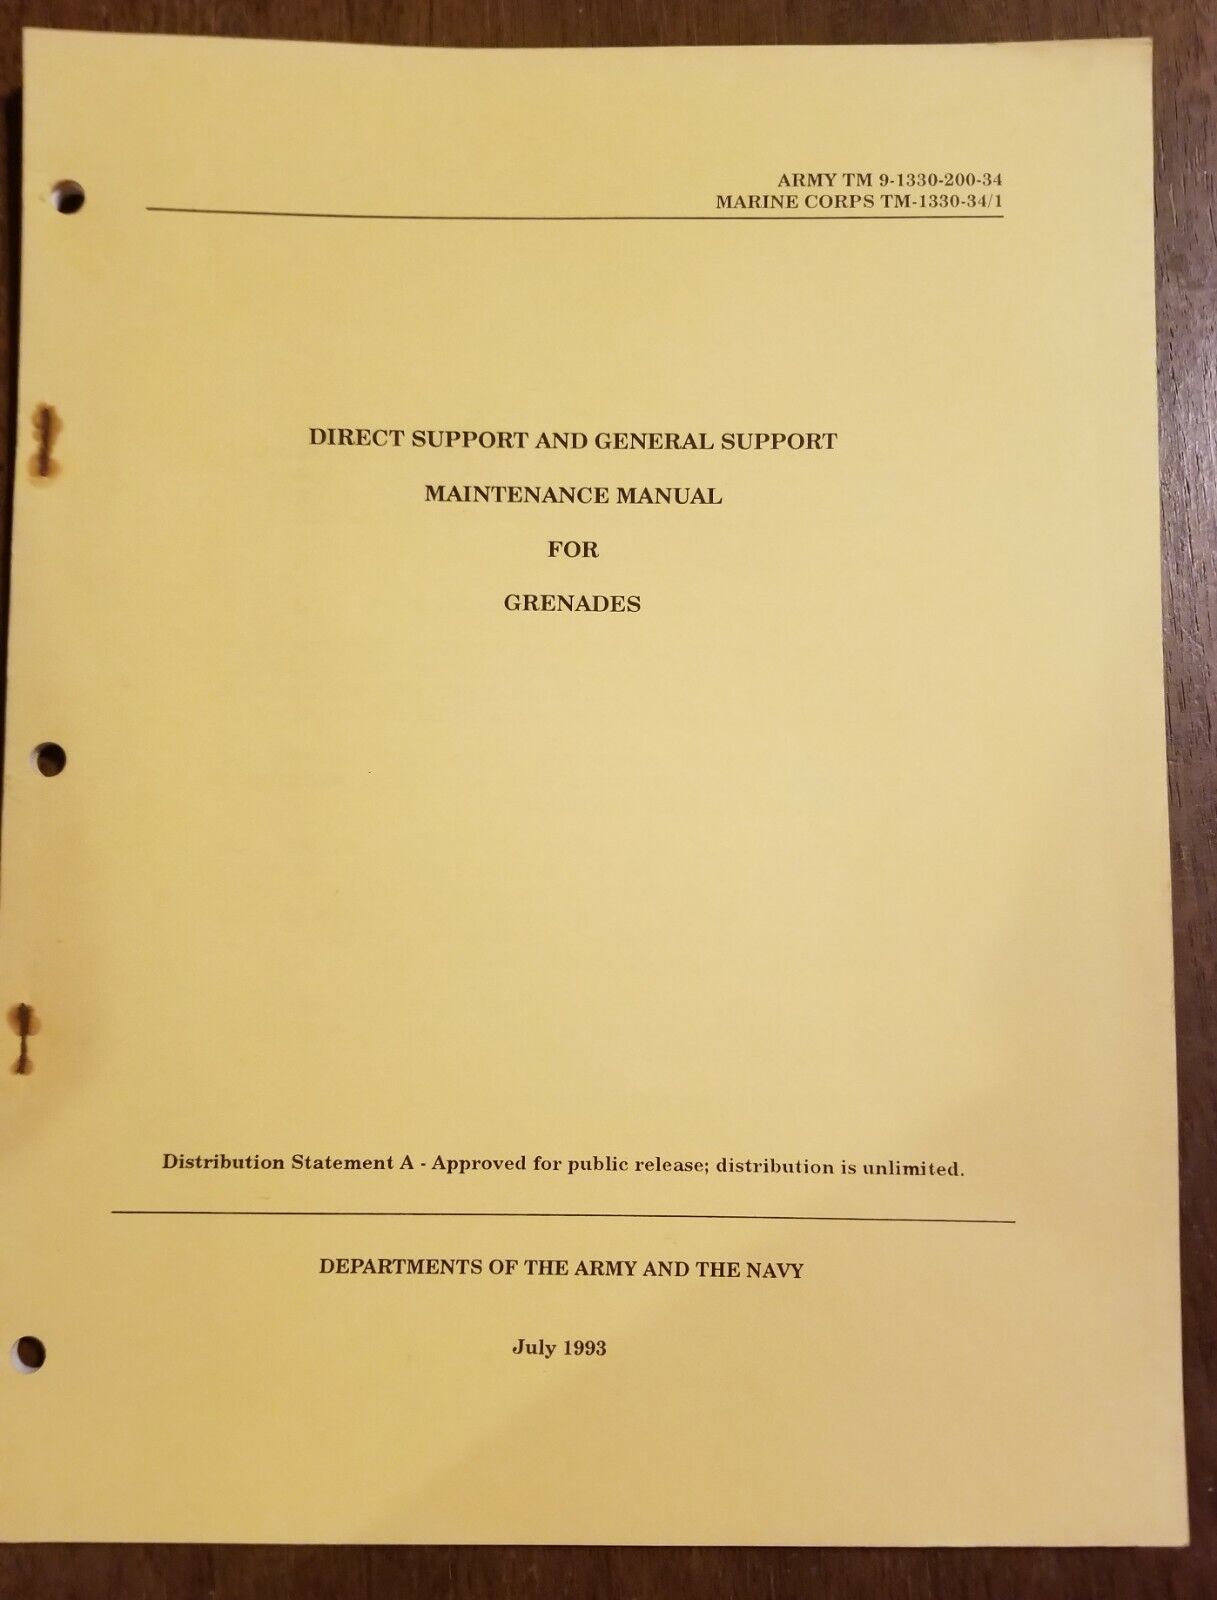 Tm 9-1330-200-34 Maintenance Manual For Grenades, July 1993